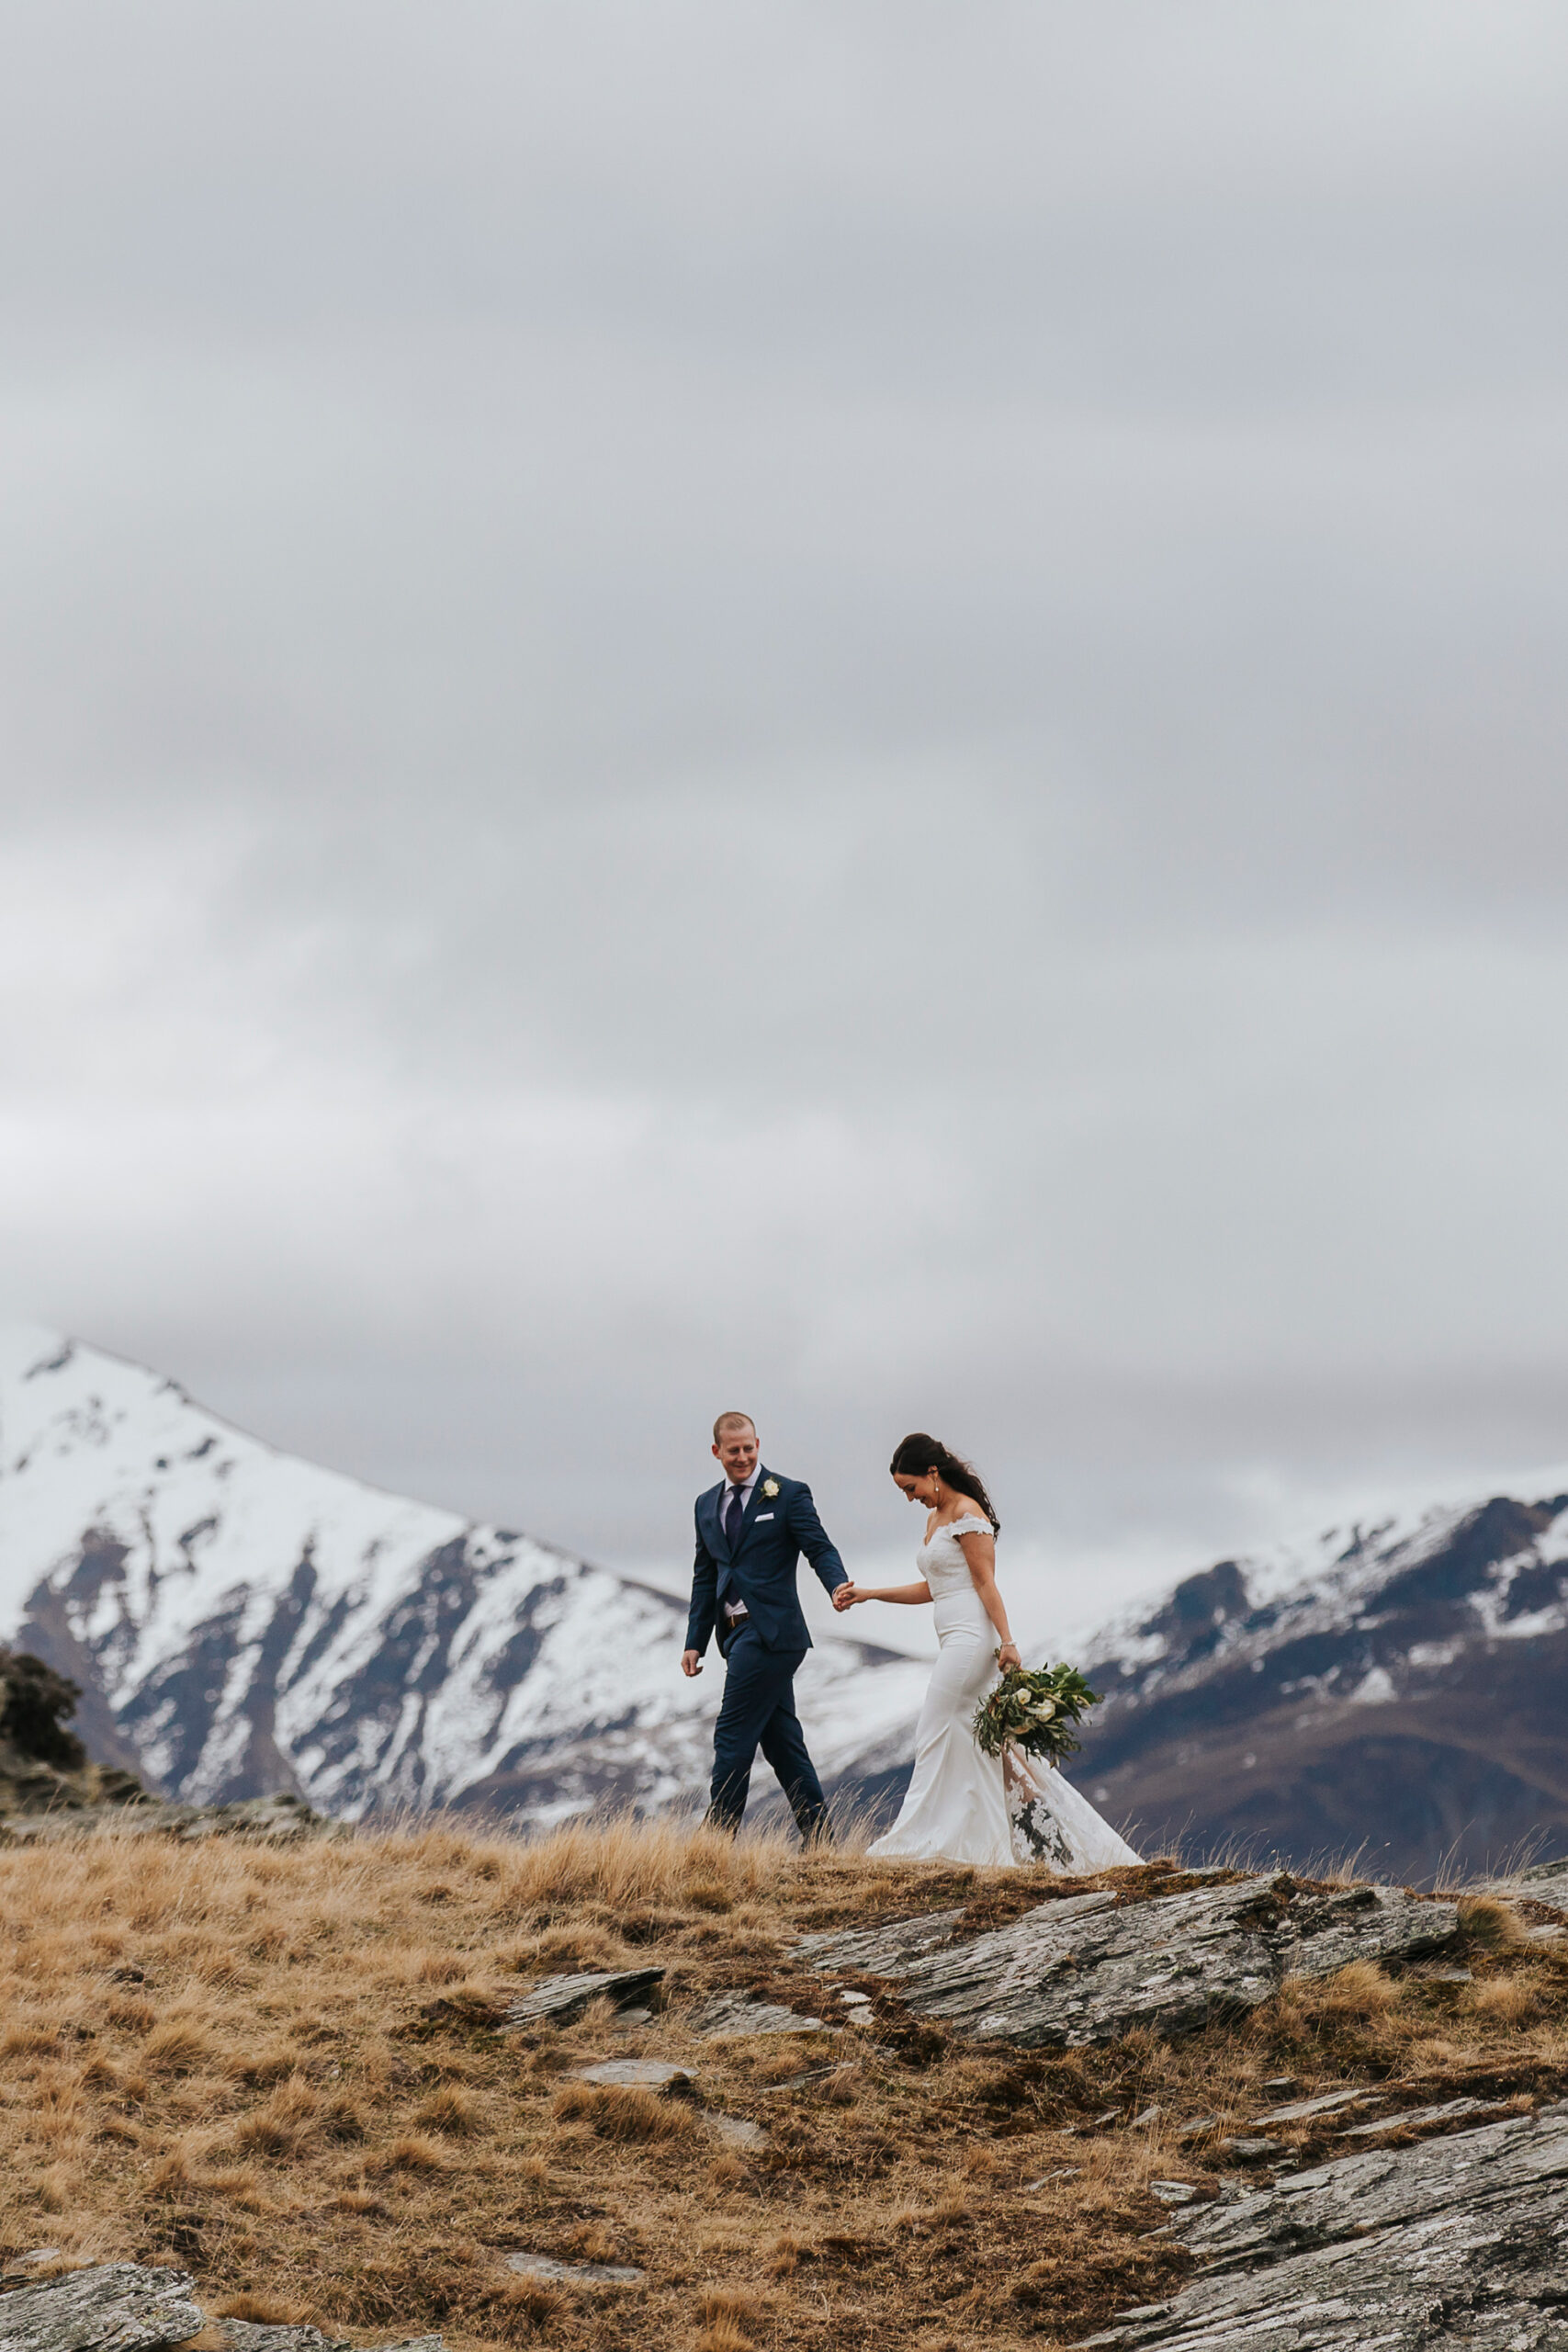 Melissa_Gareth_New-Zealand-Elopement_Larsson-Weddings_Angus-White-Photography_SBS_008